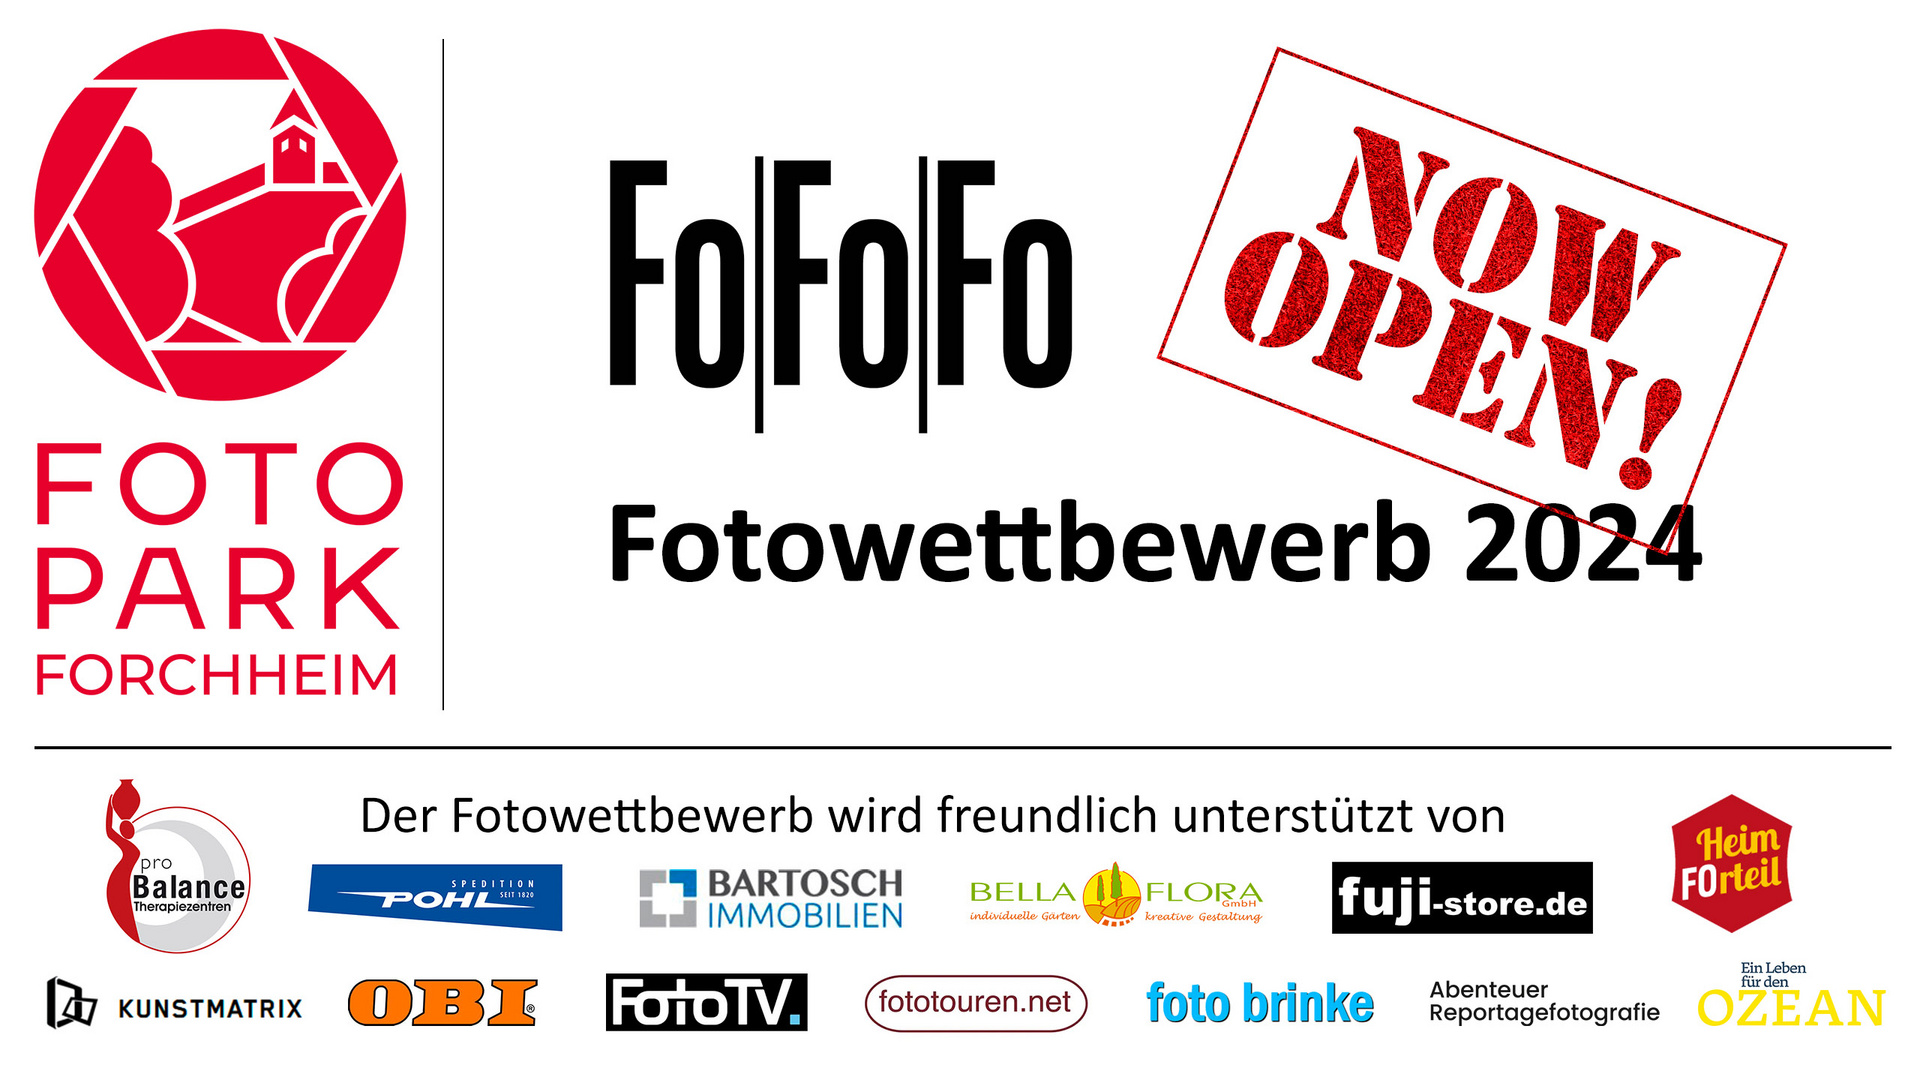 FoFoFo Fotowettbewerb 2024